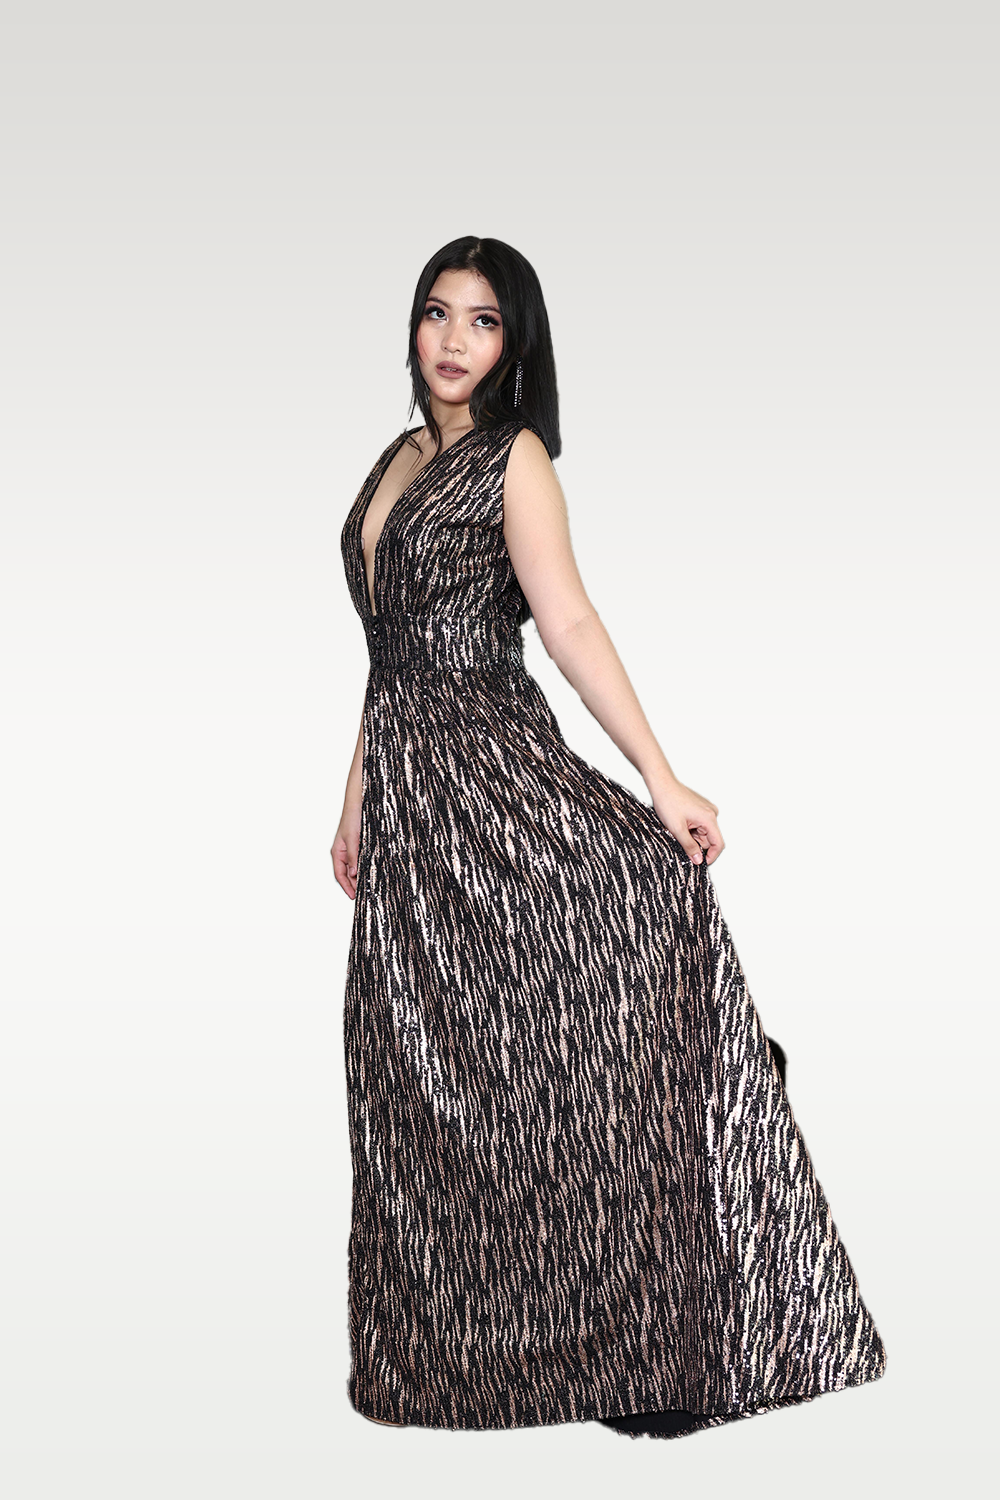 Alish Rose Gold & Black Shimmery Gown RMEN2